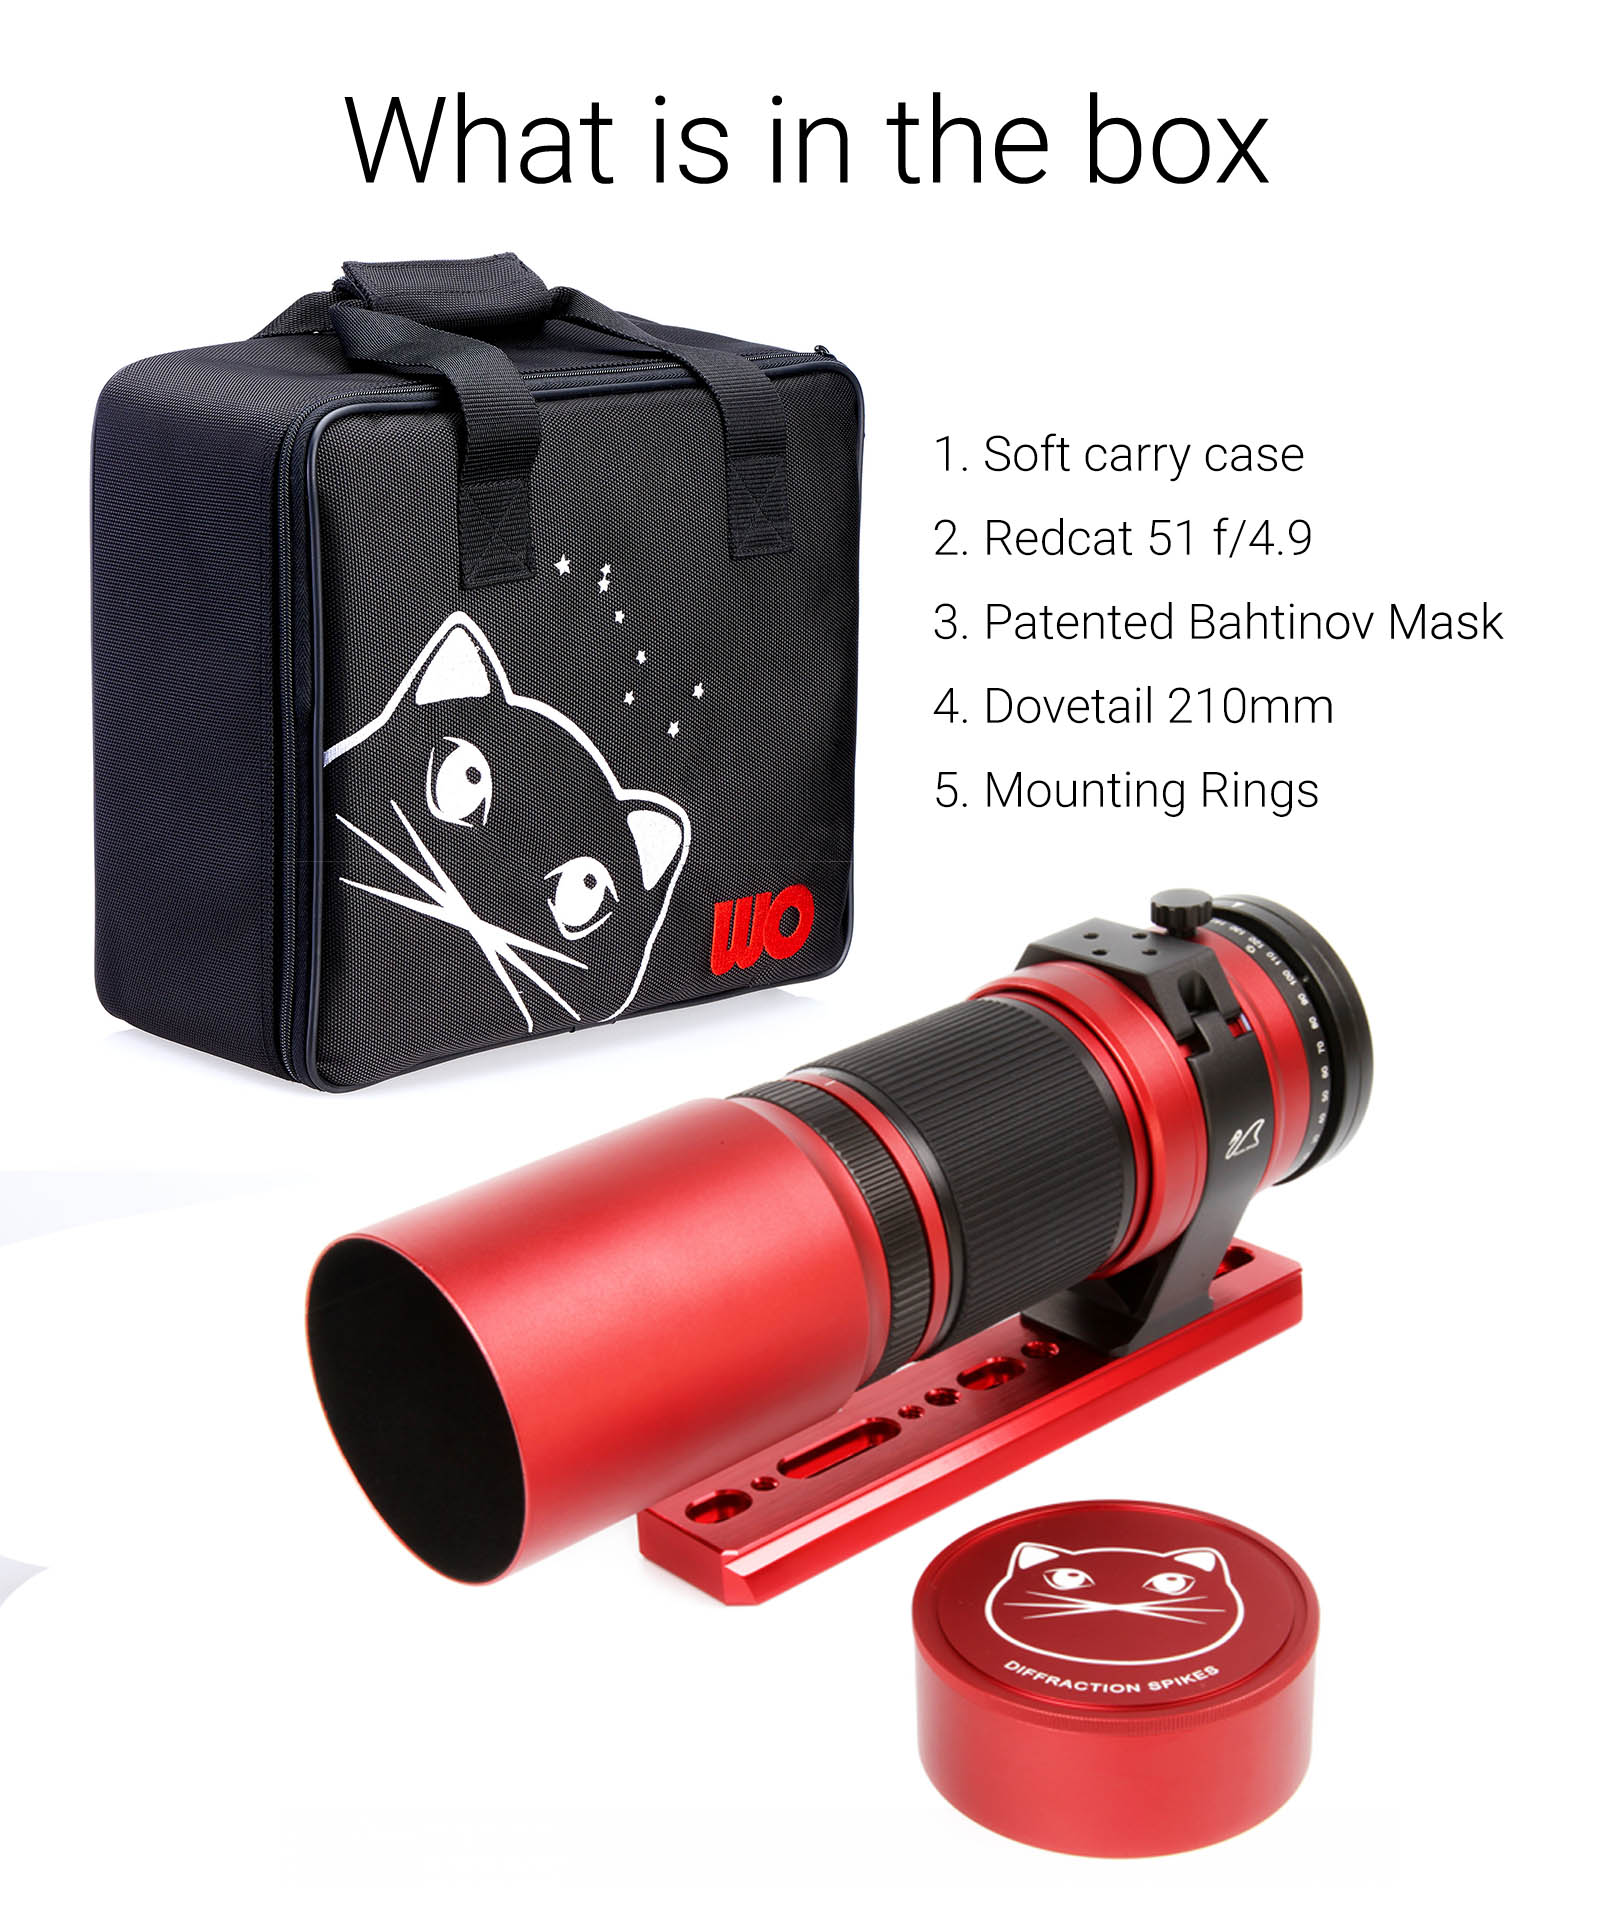 redcat-51-in-the-box.jpg